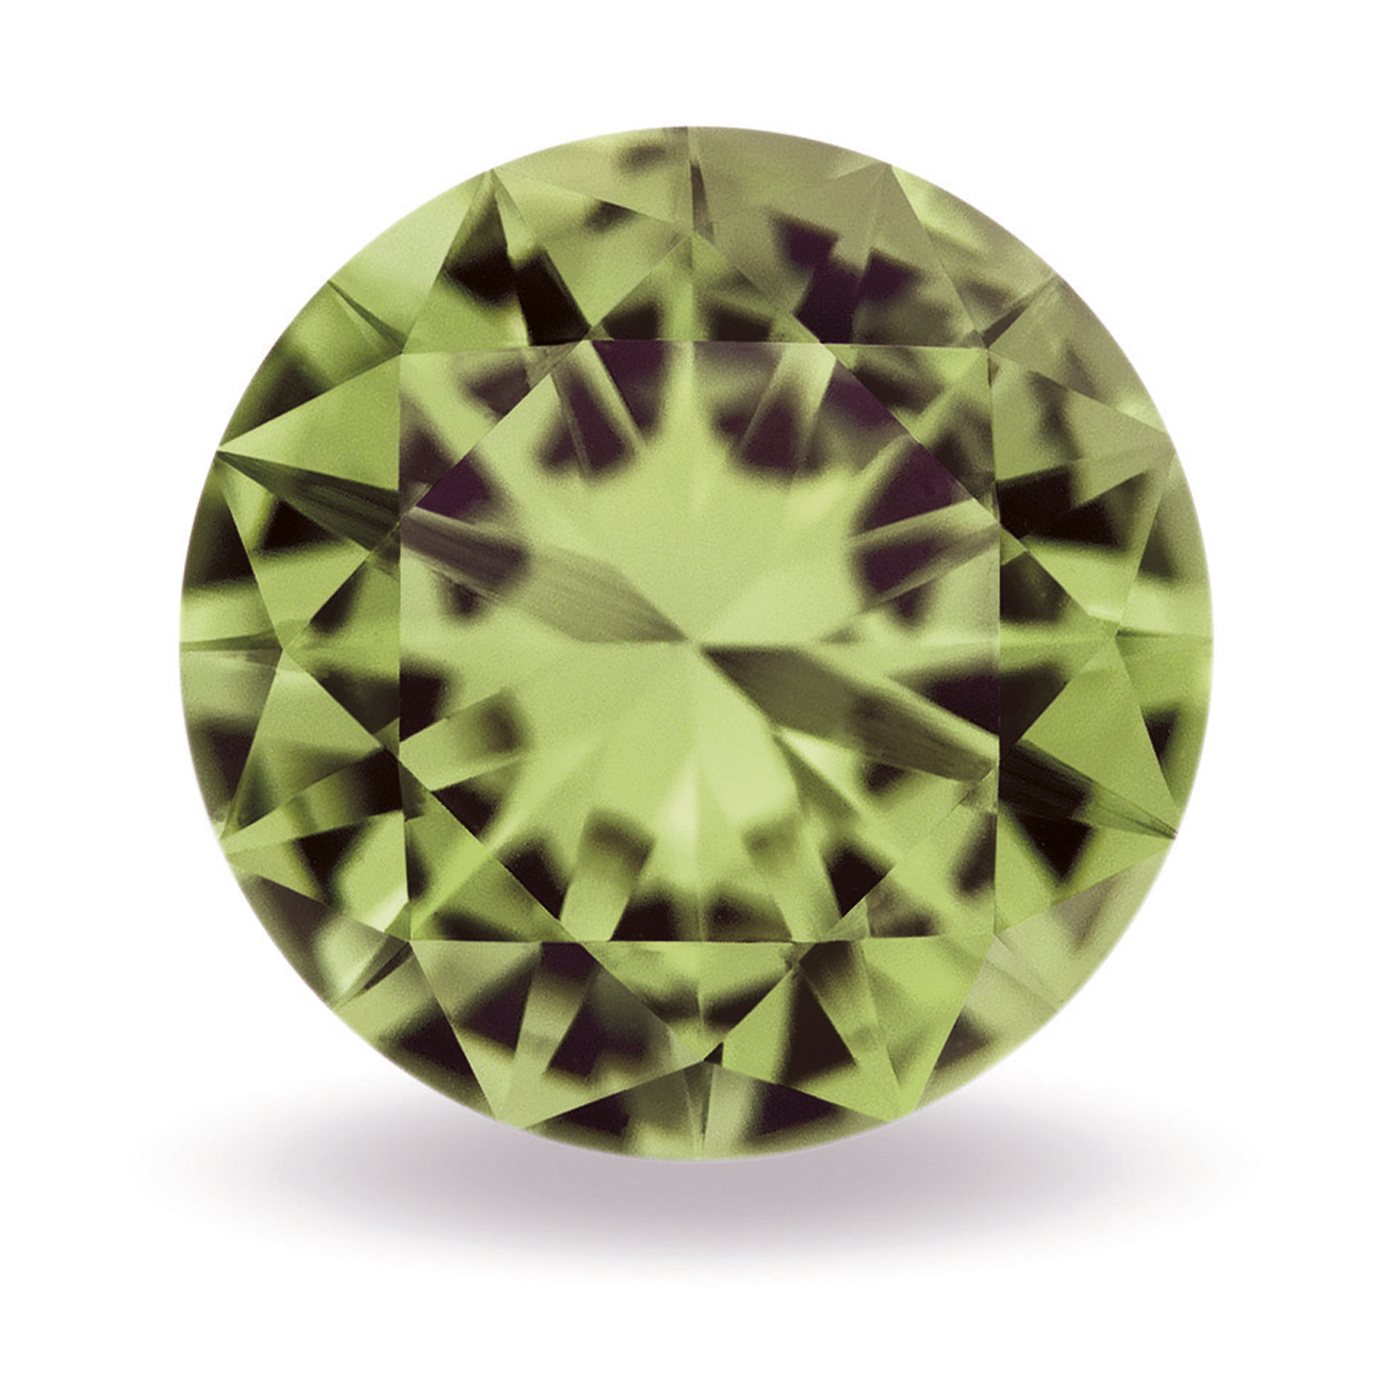 Alpinite, Olive Green, 2.0 mm, Brilliant Cut - 5 pieces